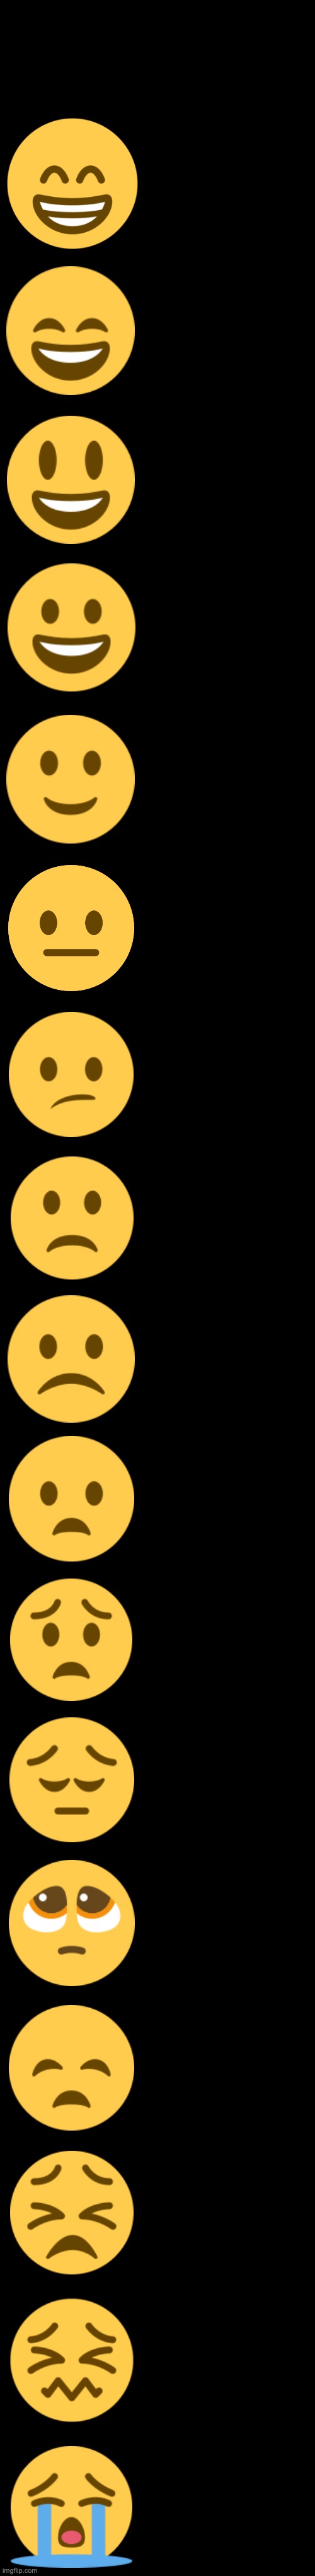 Here's what you wanted Micefond. | image tagged in emoji,emojis,emoji becoming sad,extended,emoji becoming sad extended,new template | made w/ Imgflip meme maker